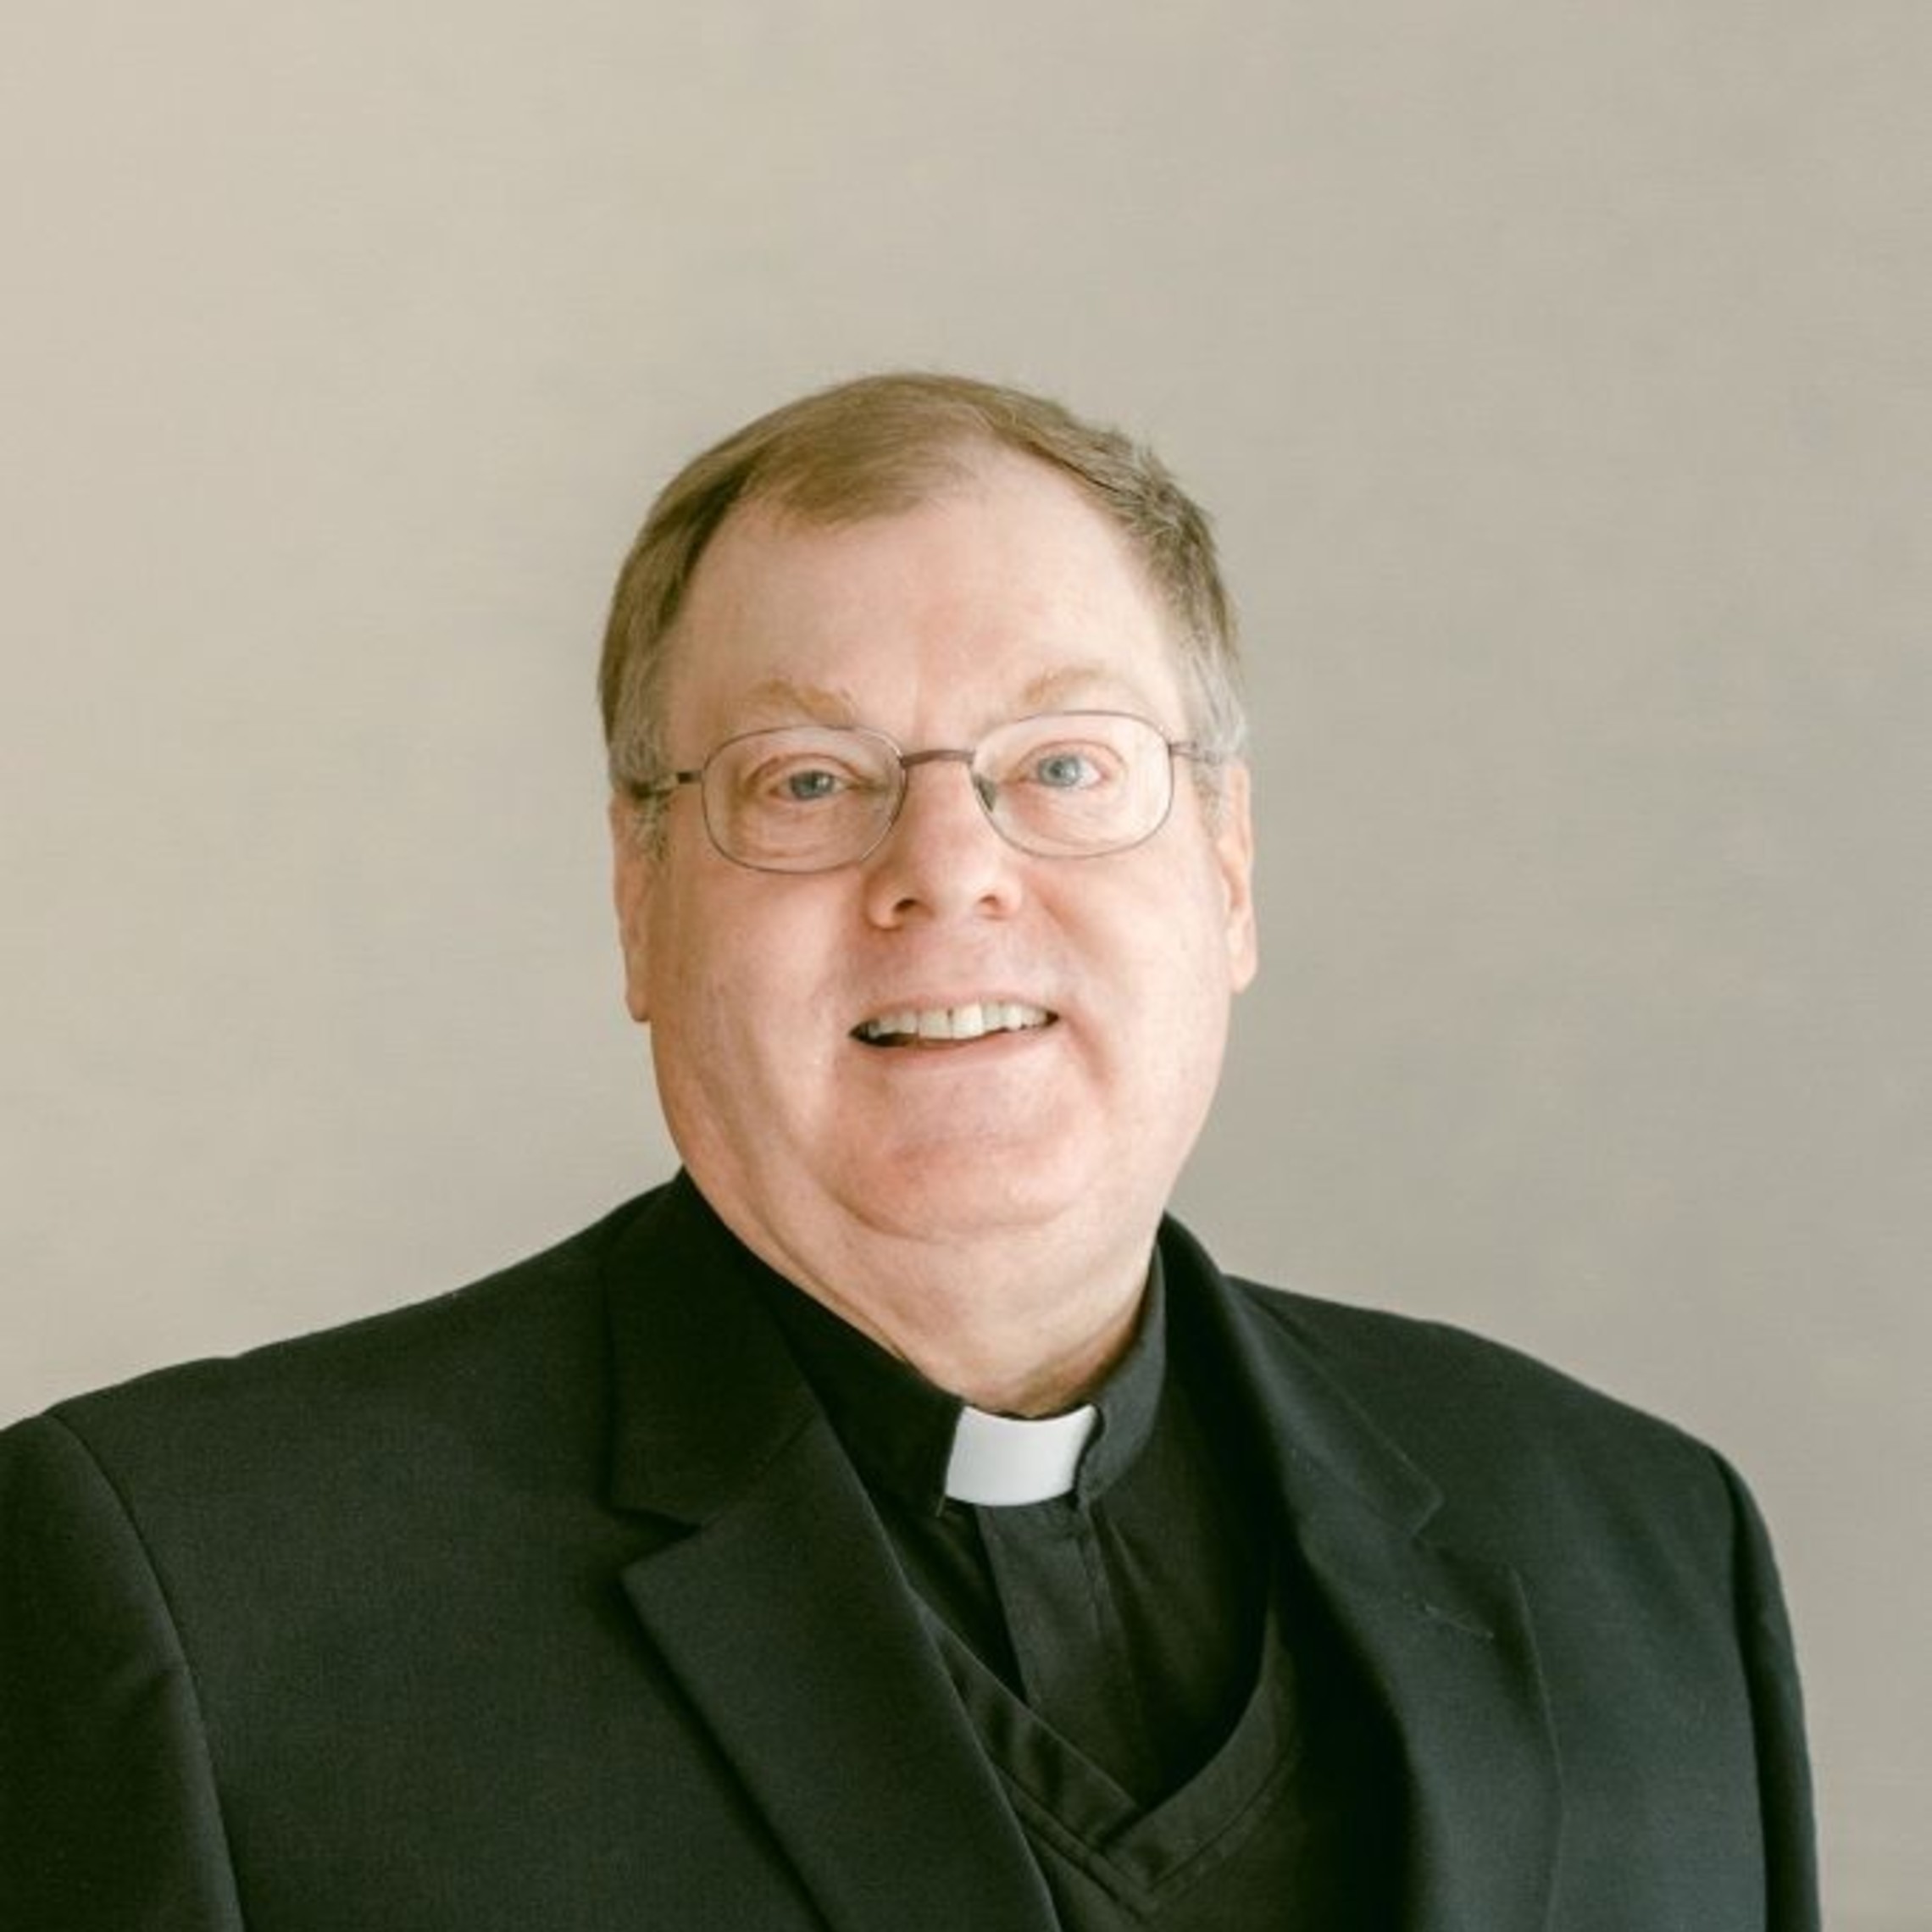 Fr Ed Smith